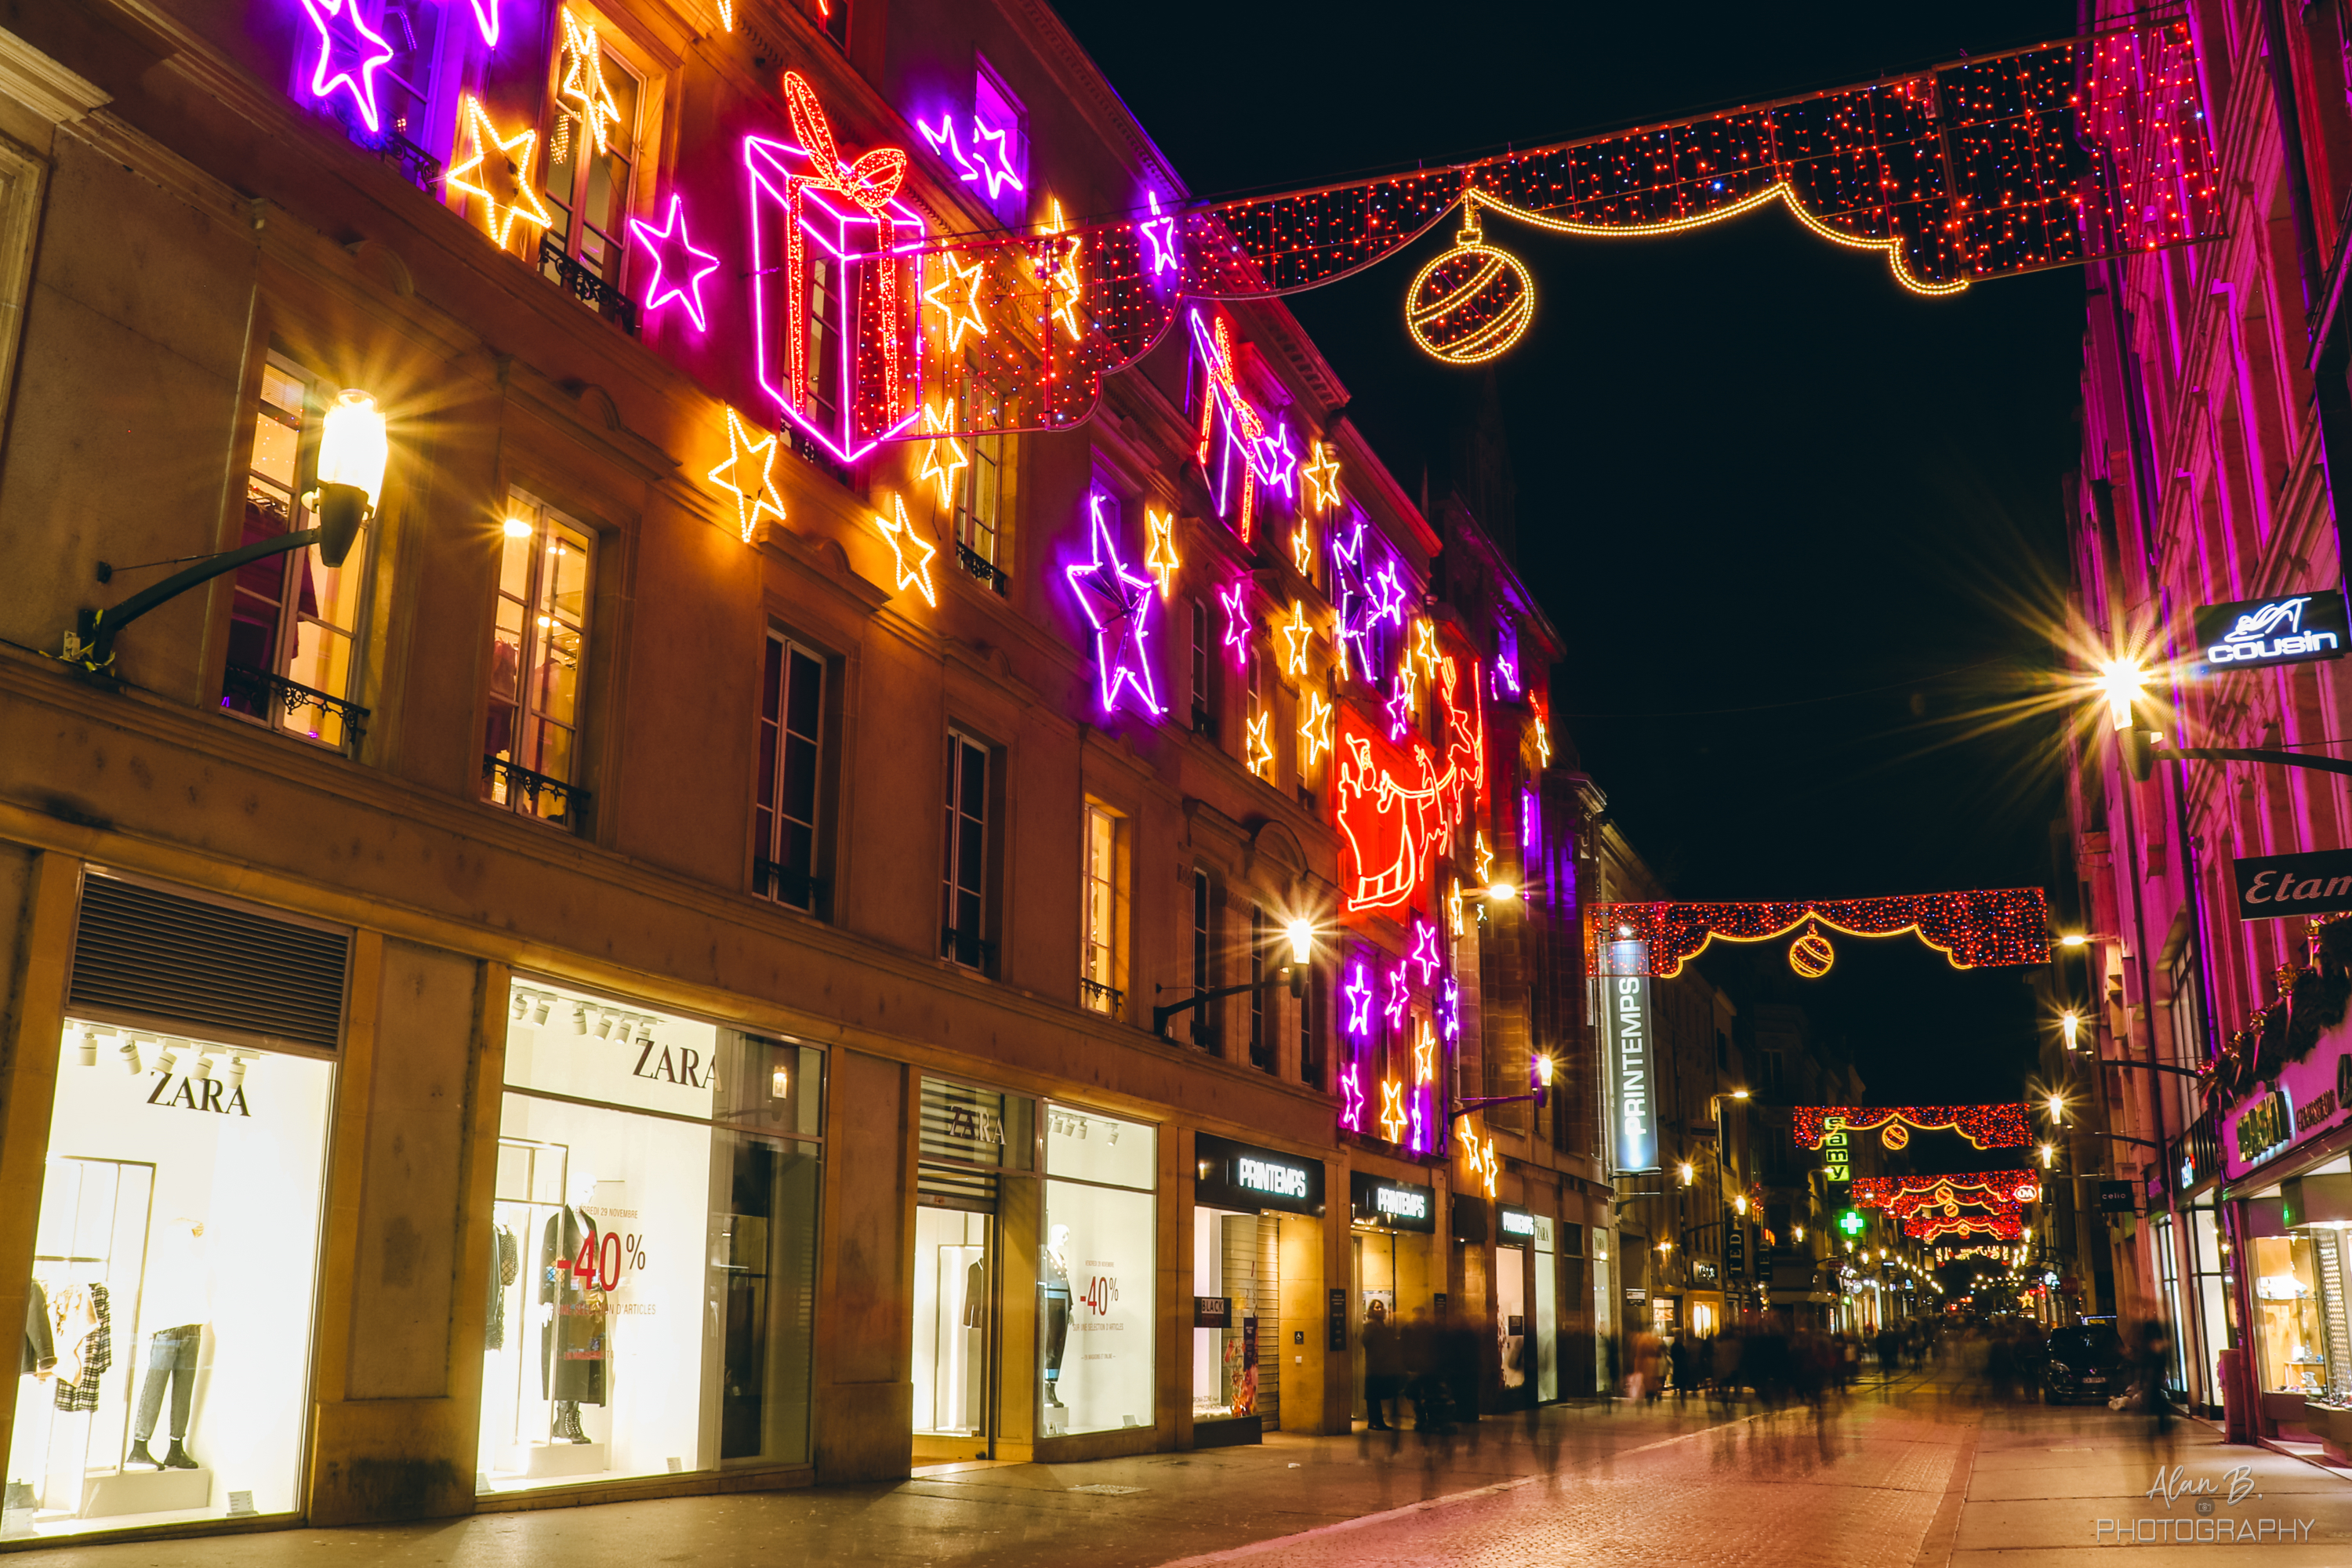 Illuminations de Noël sur la façade du Printemps dans la Rue Serpenoise.